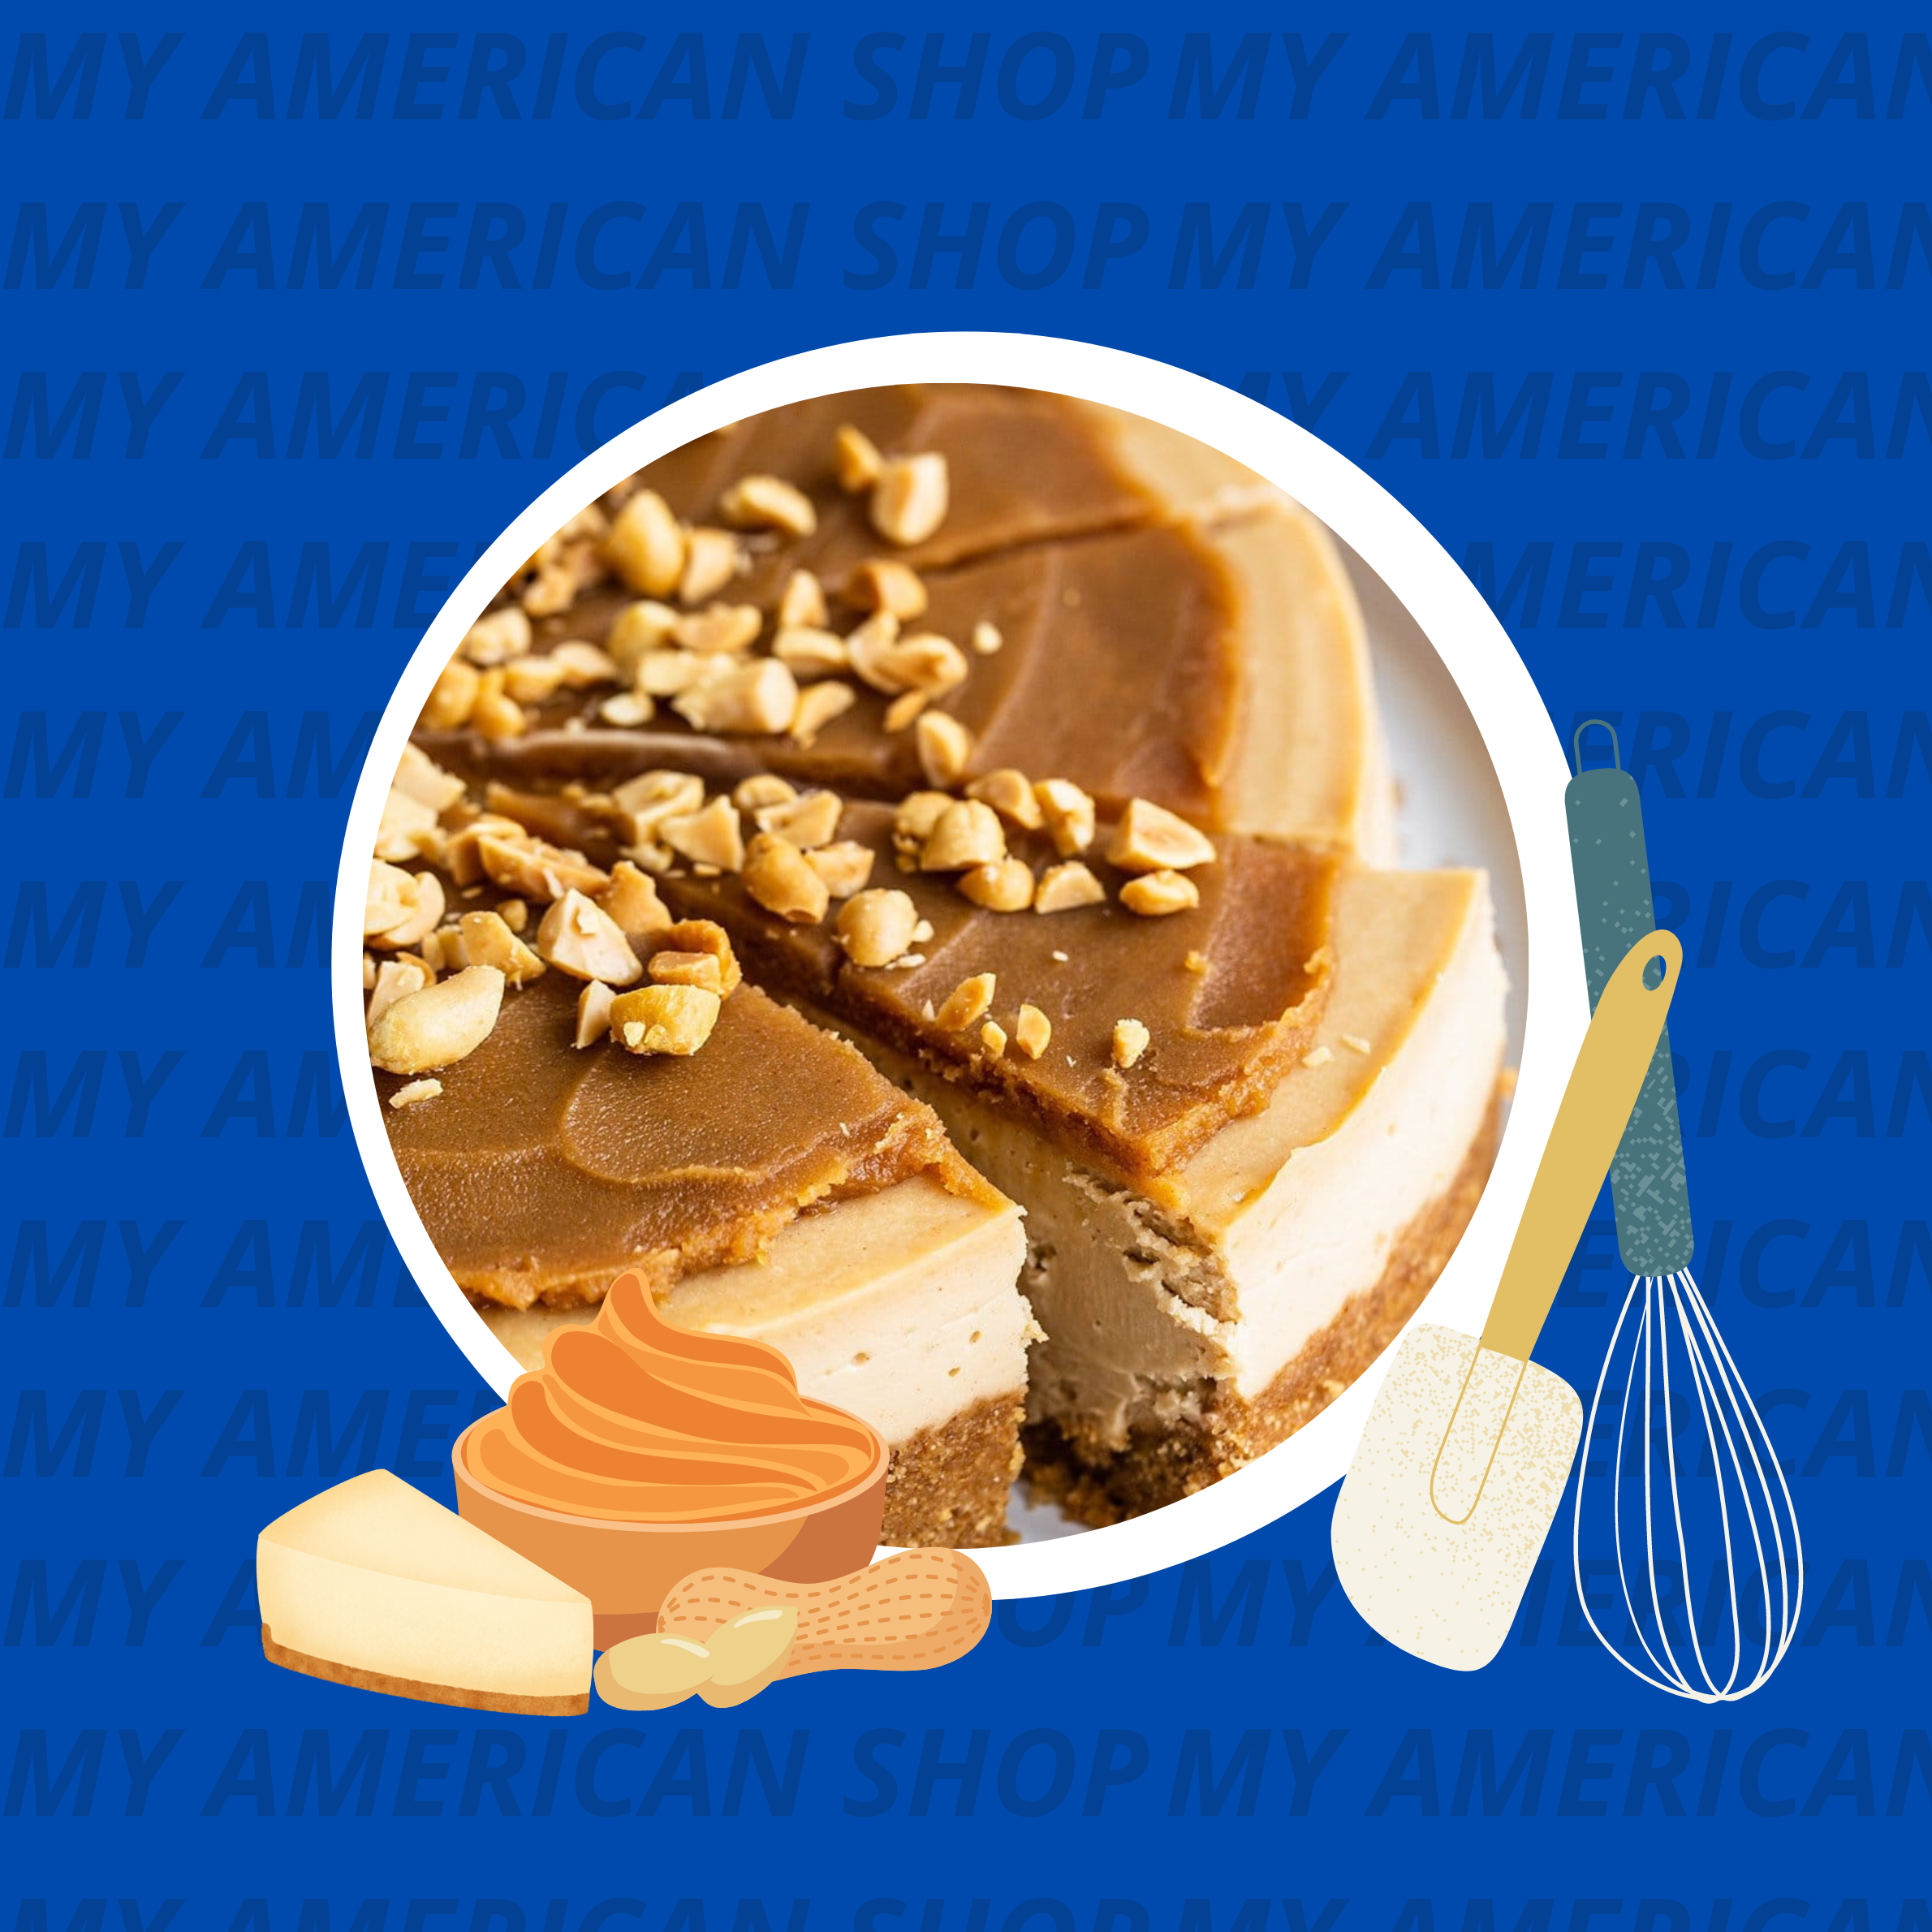 Cheesecake au beurre de cacahuète - My American Shop